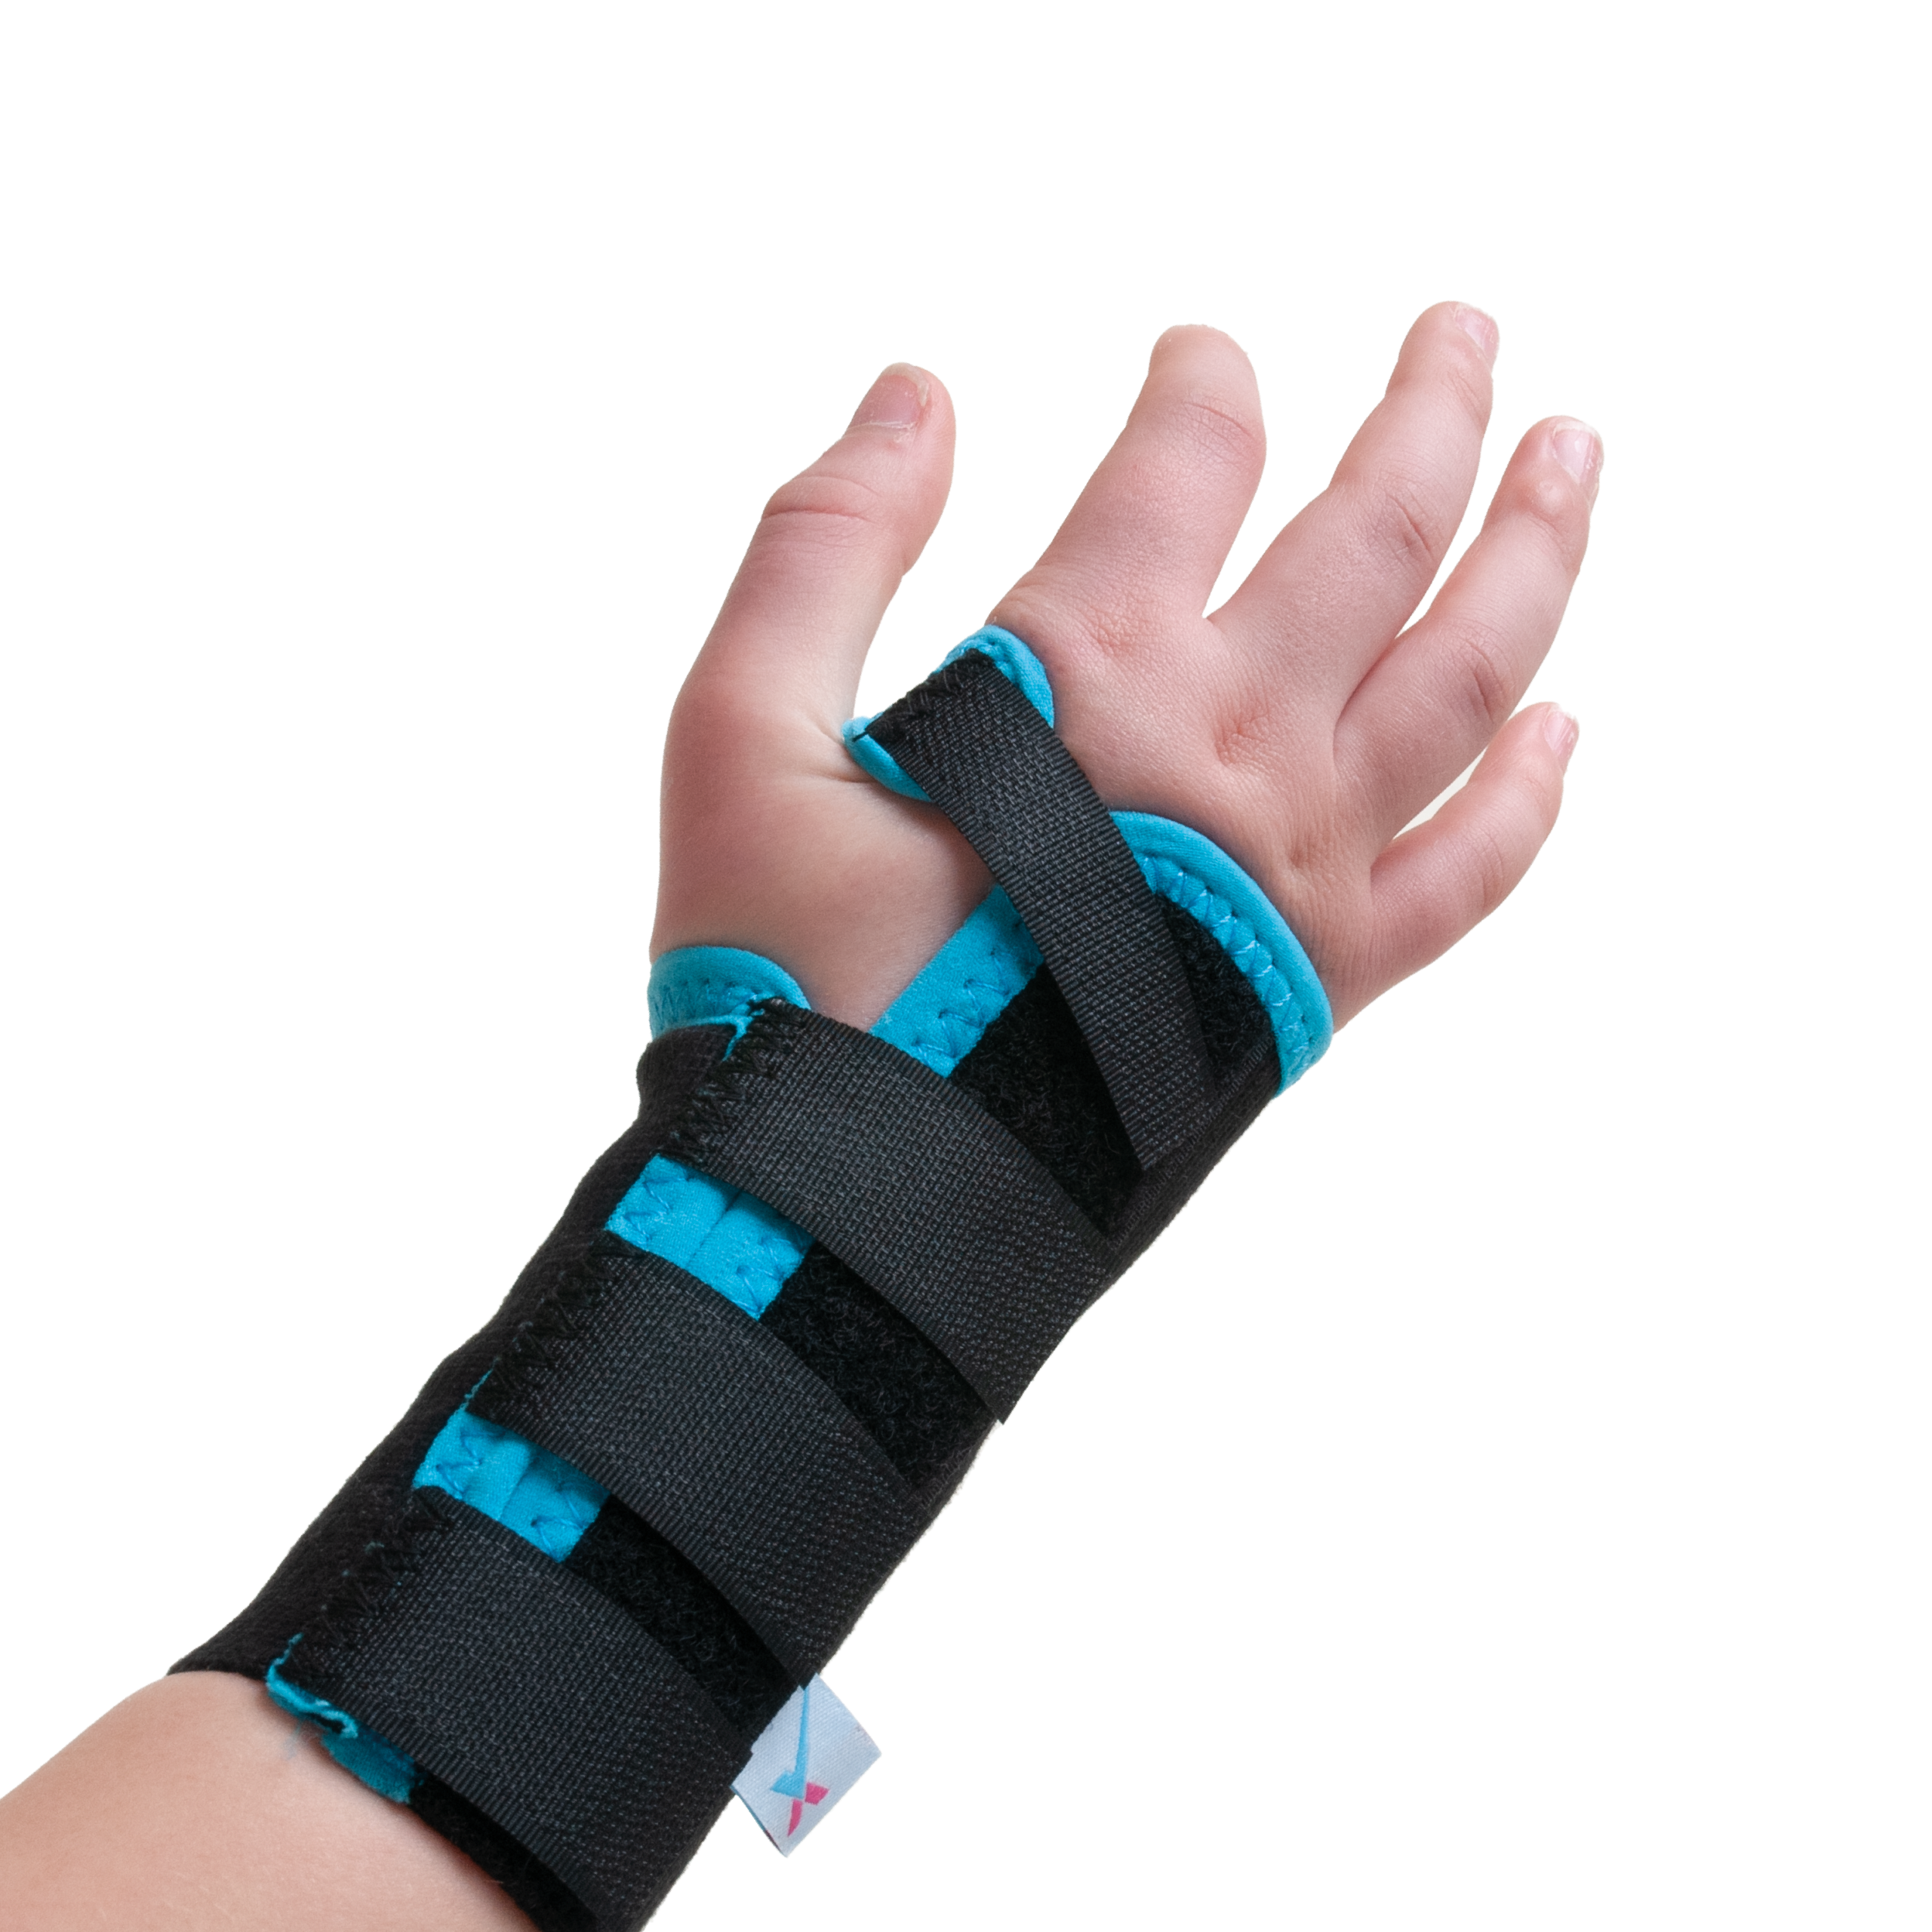 Elastic Wrist Brace For Children, Kids Wrist Brace, Orthotix